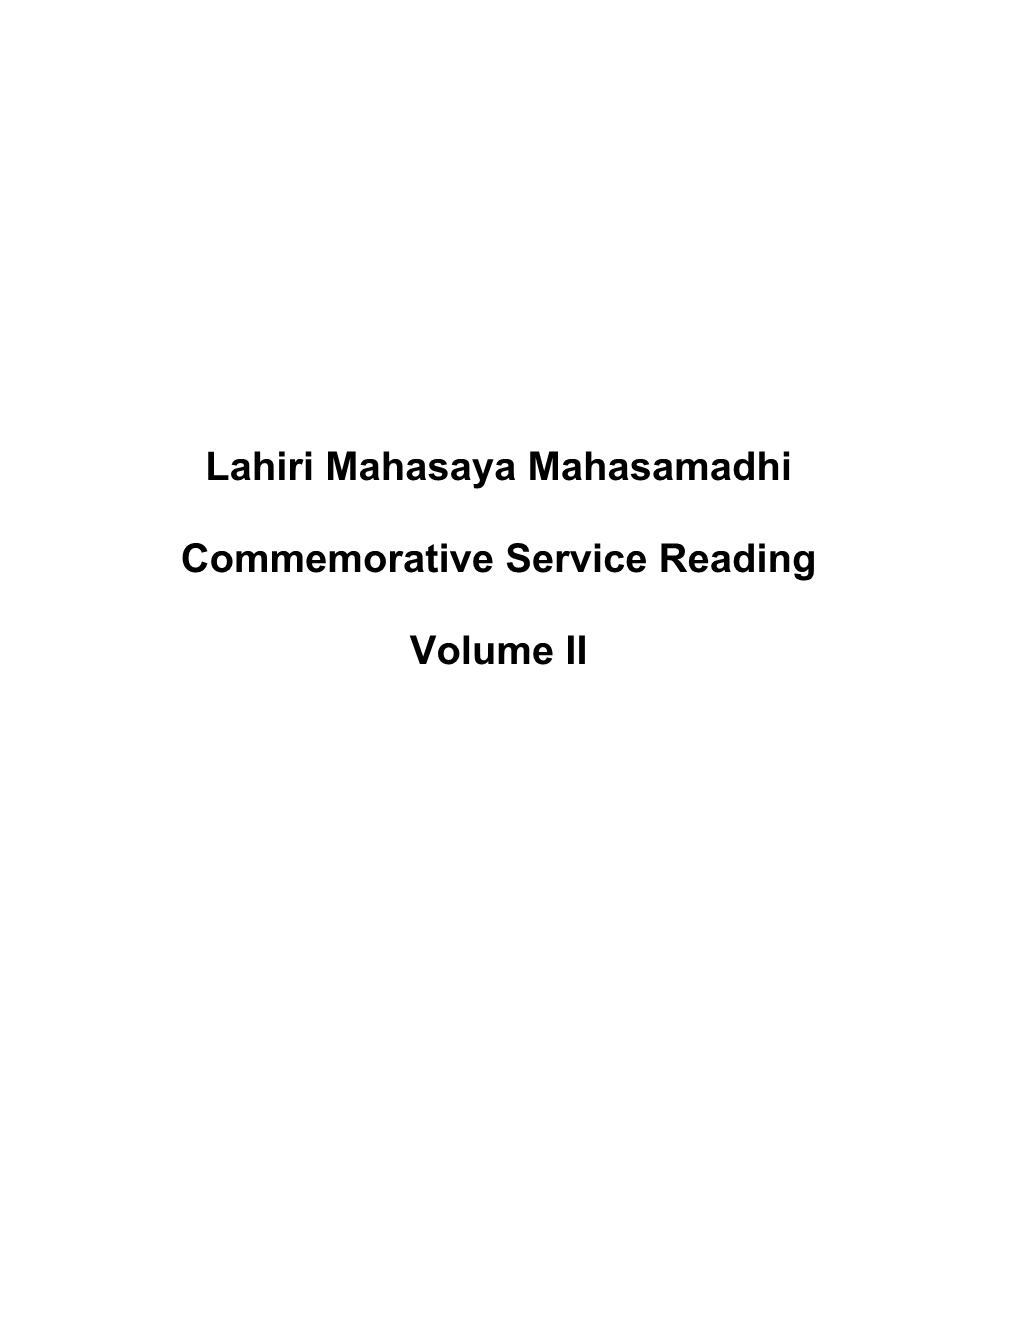 Lahiri Mahasaya Mahasamadhi Commemorative Service Reading